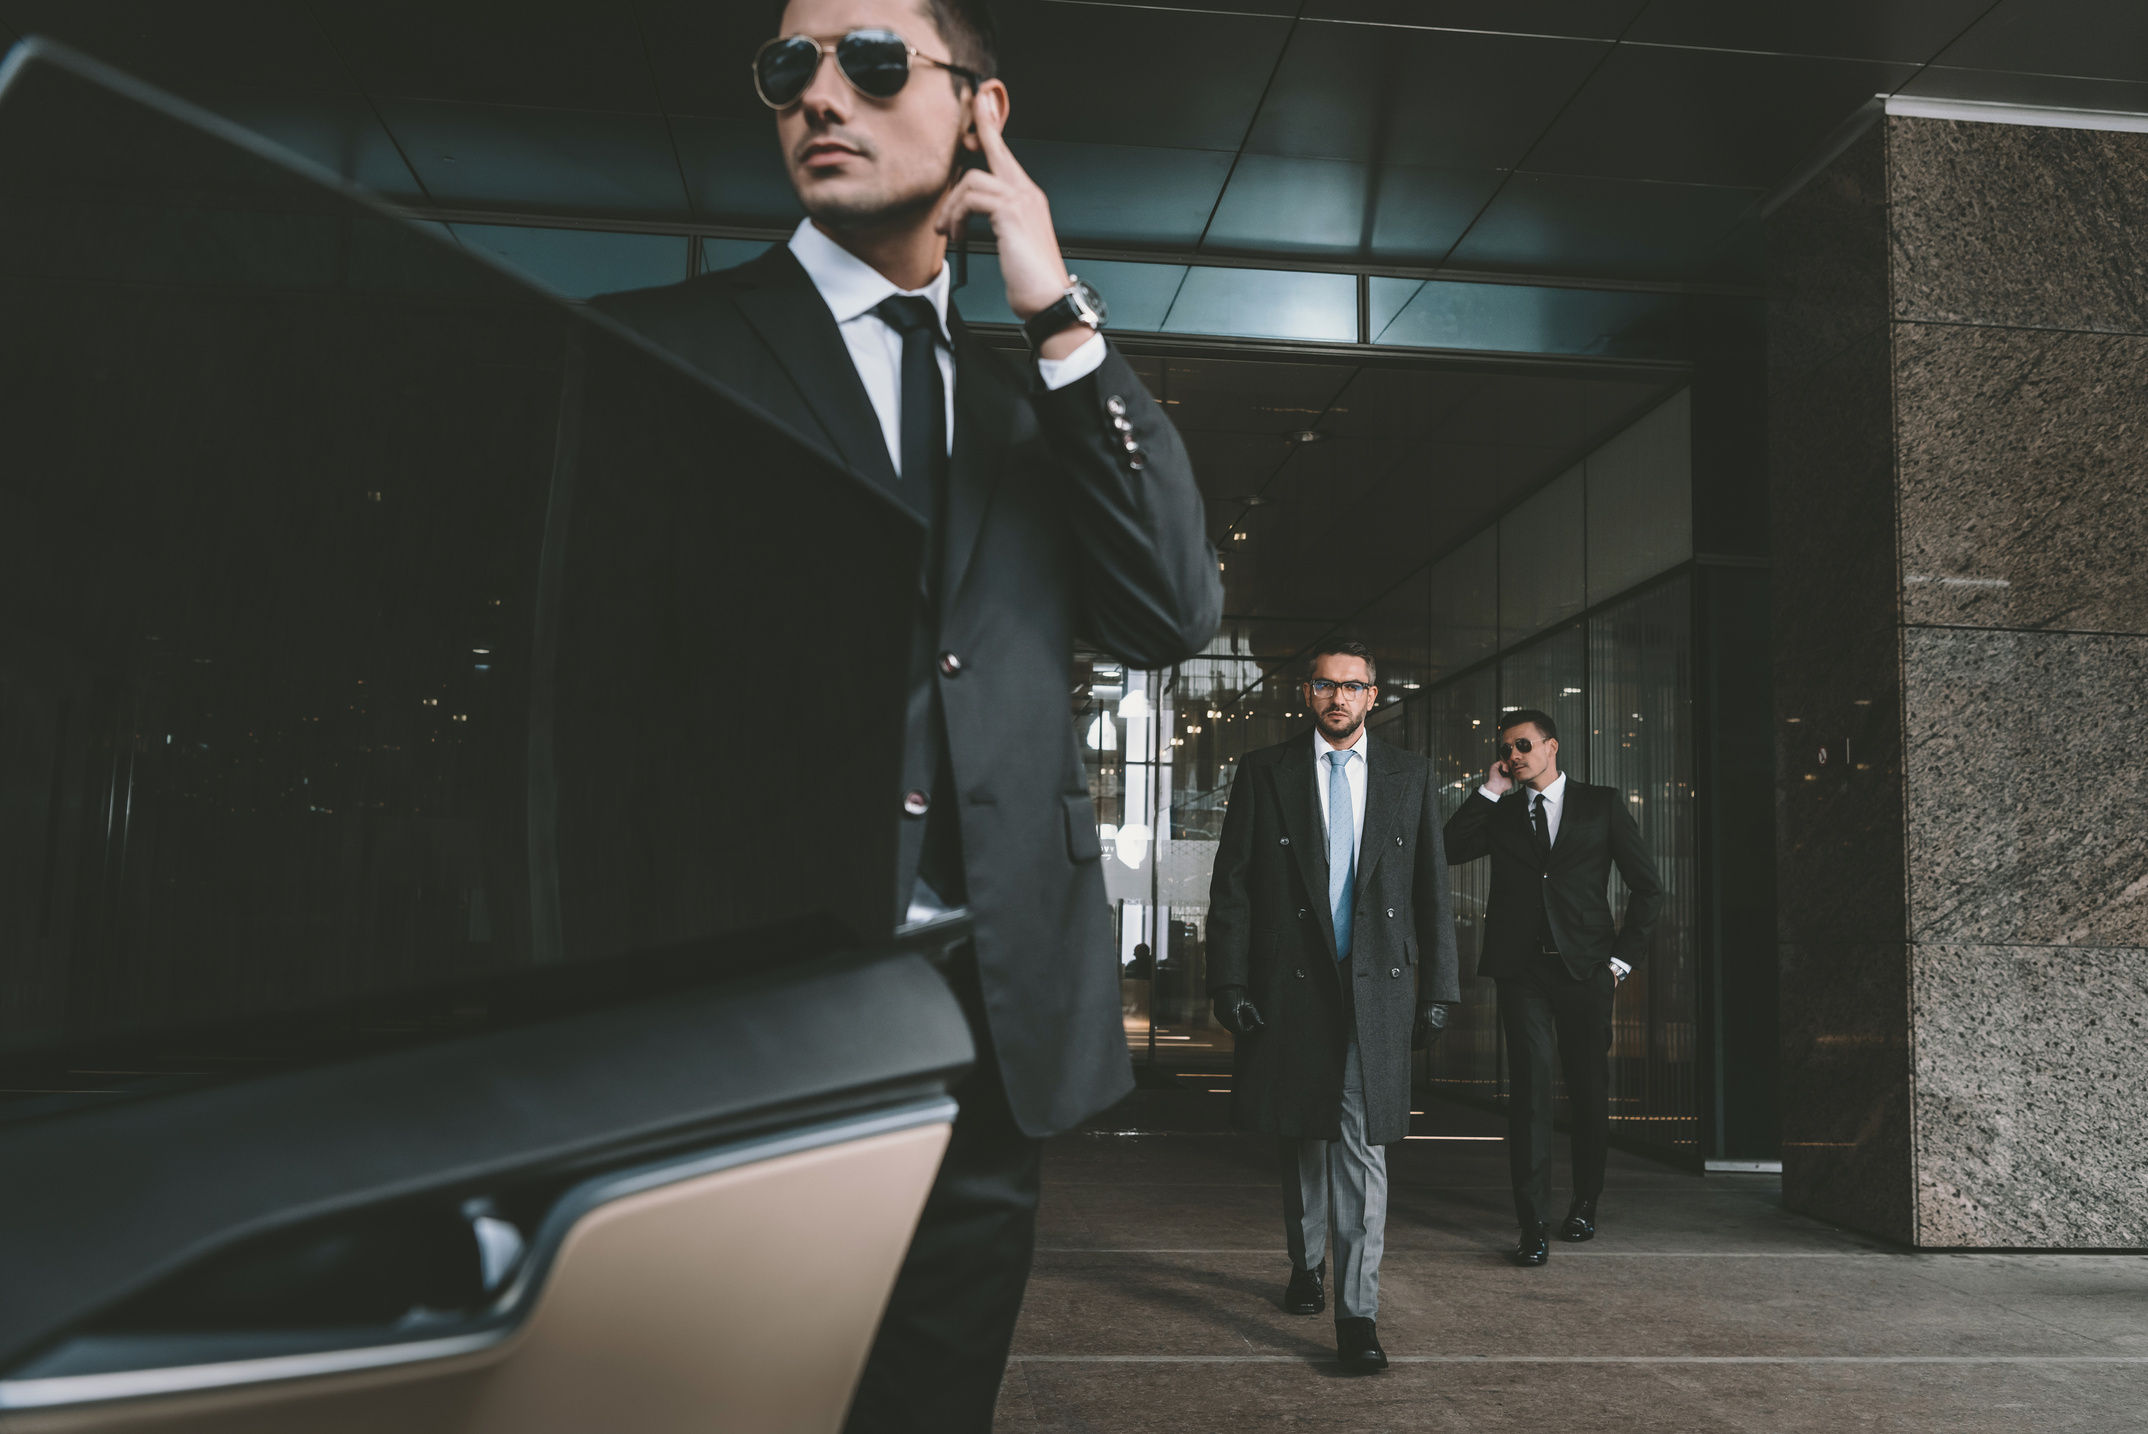 bodyguard opening car door for businessman